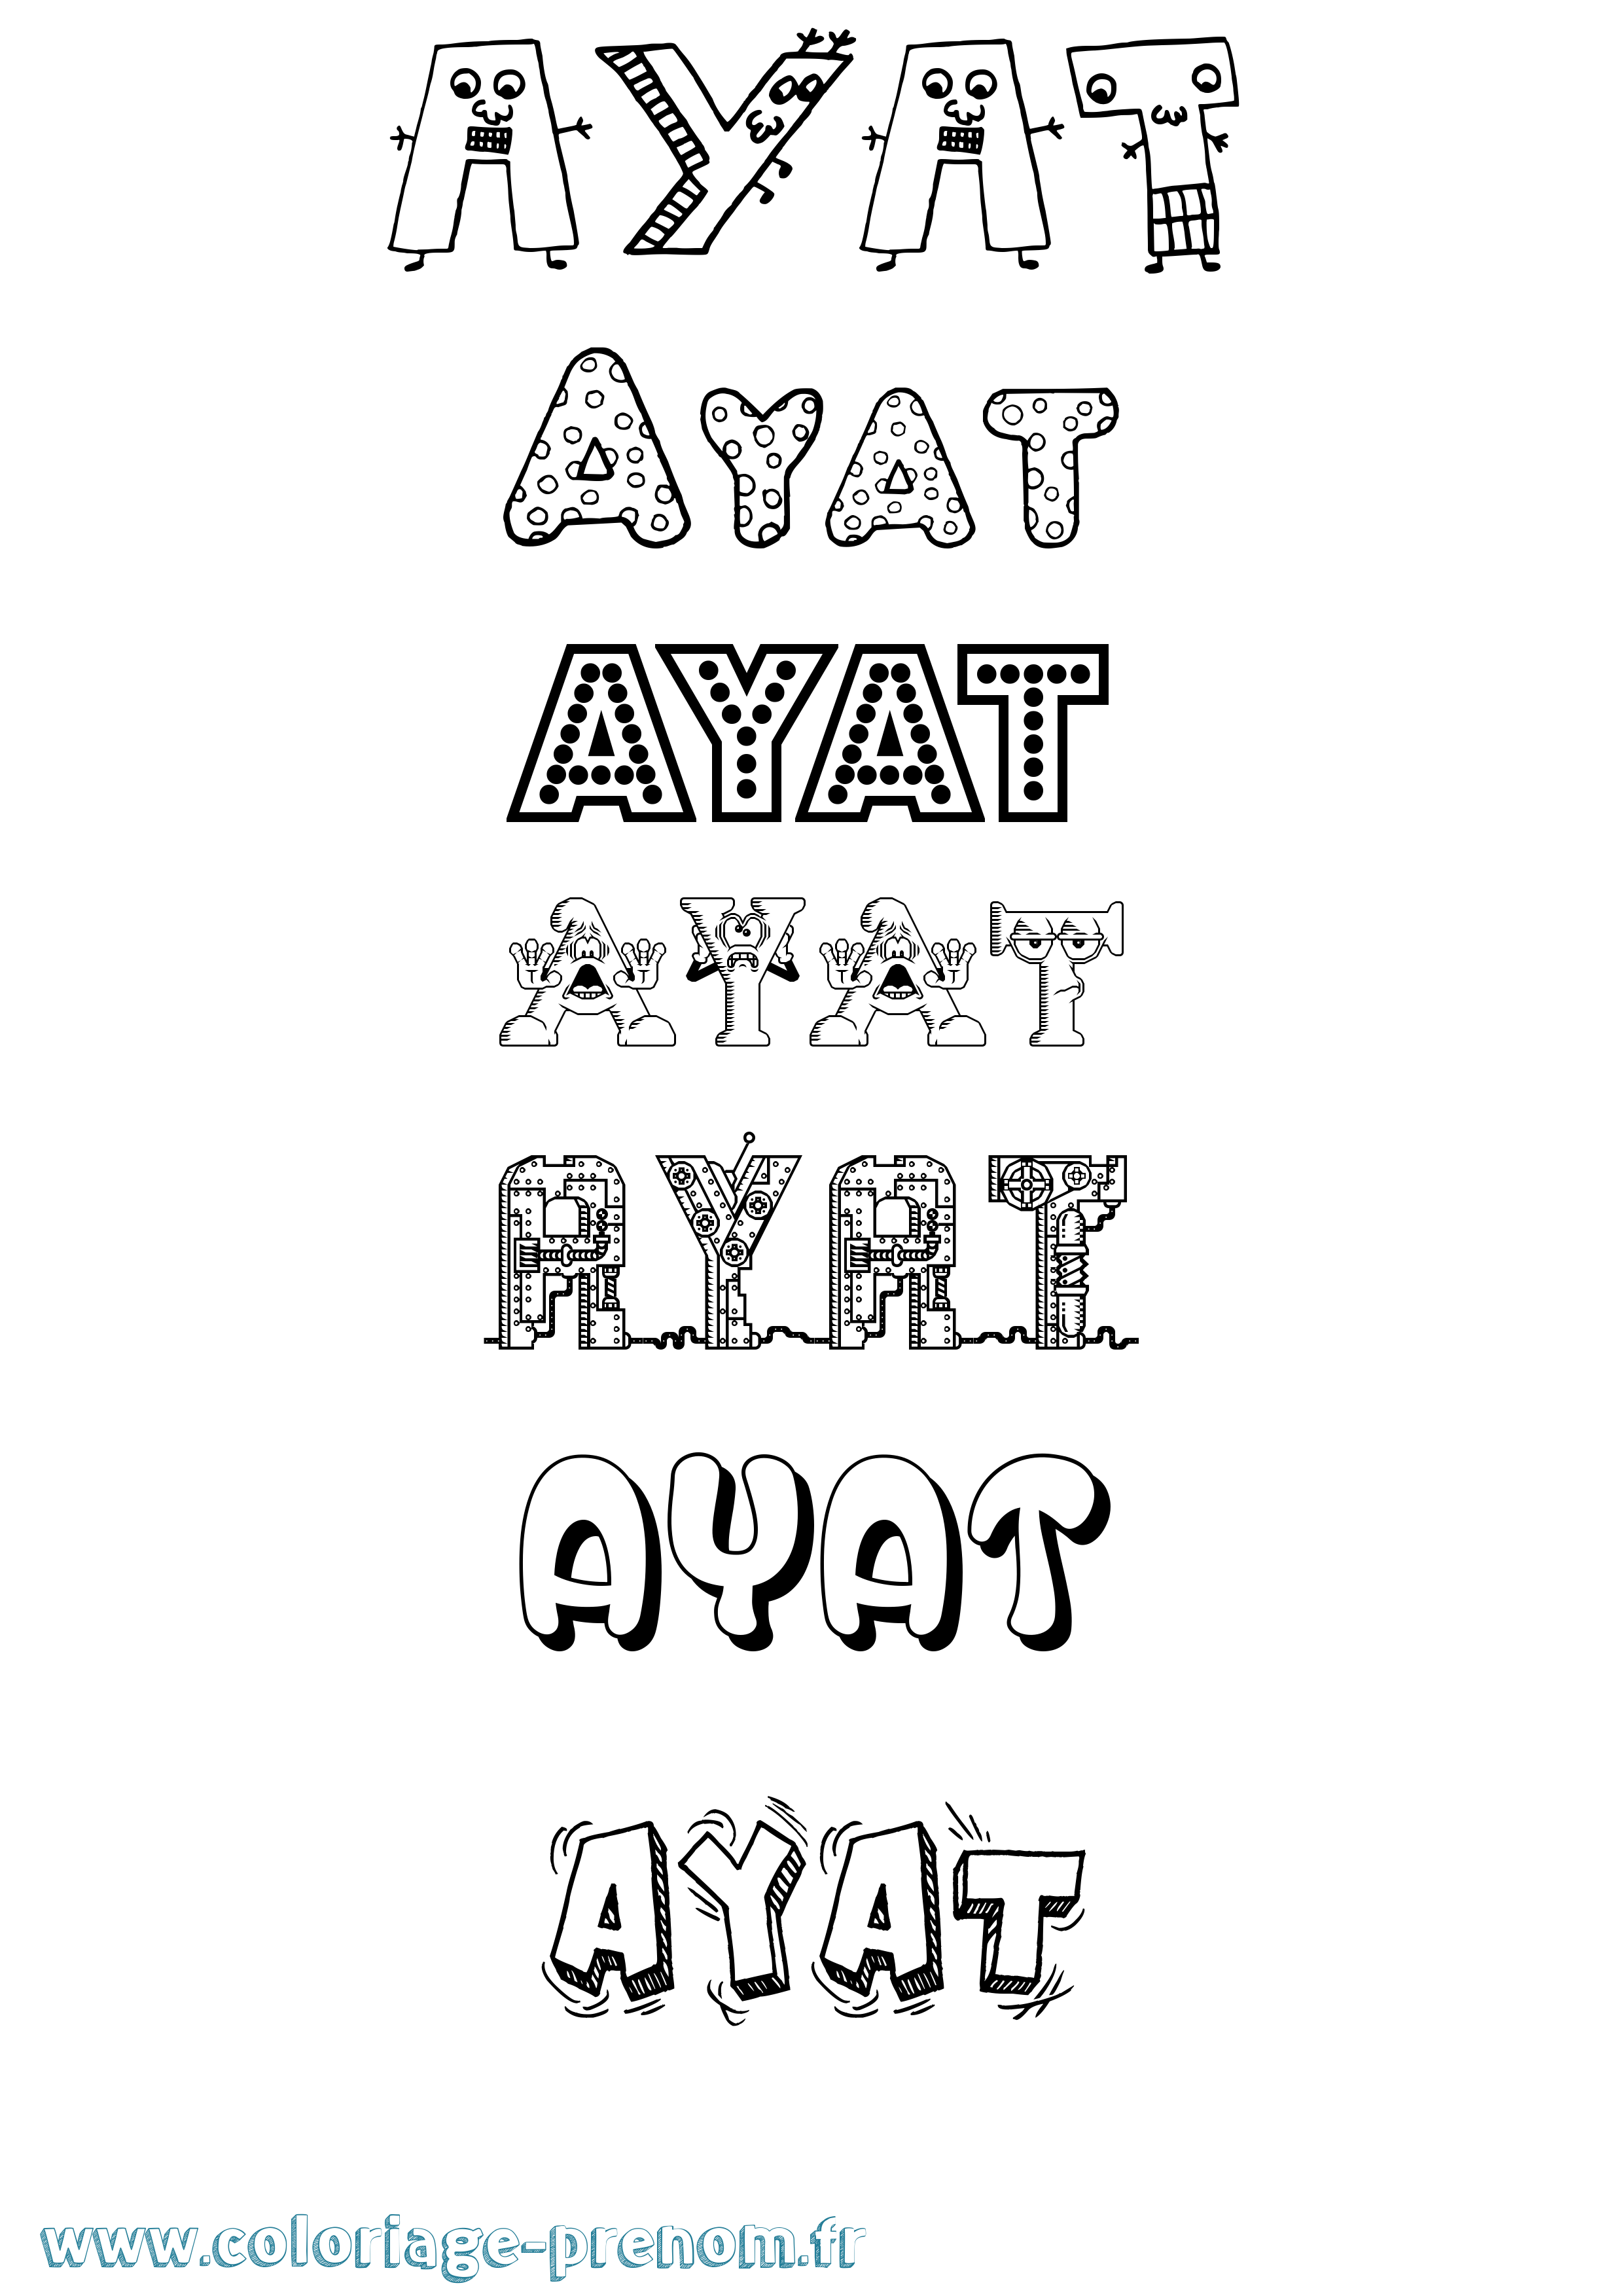 Coloriage prénom Ayat Fun